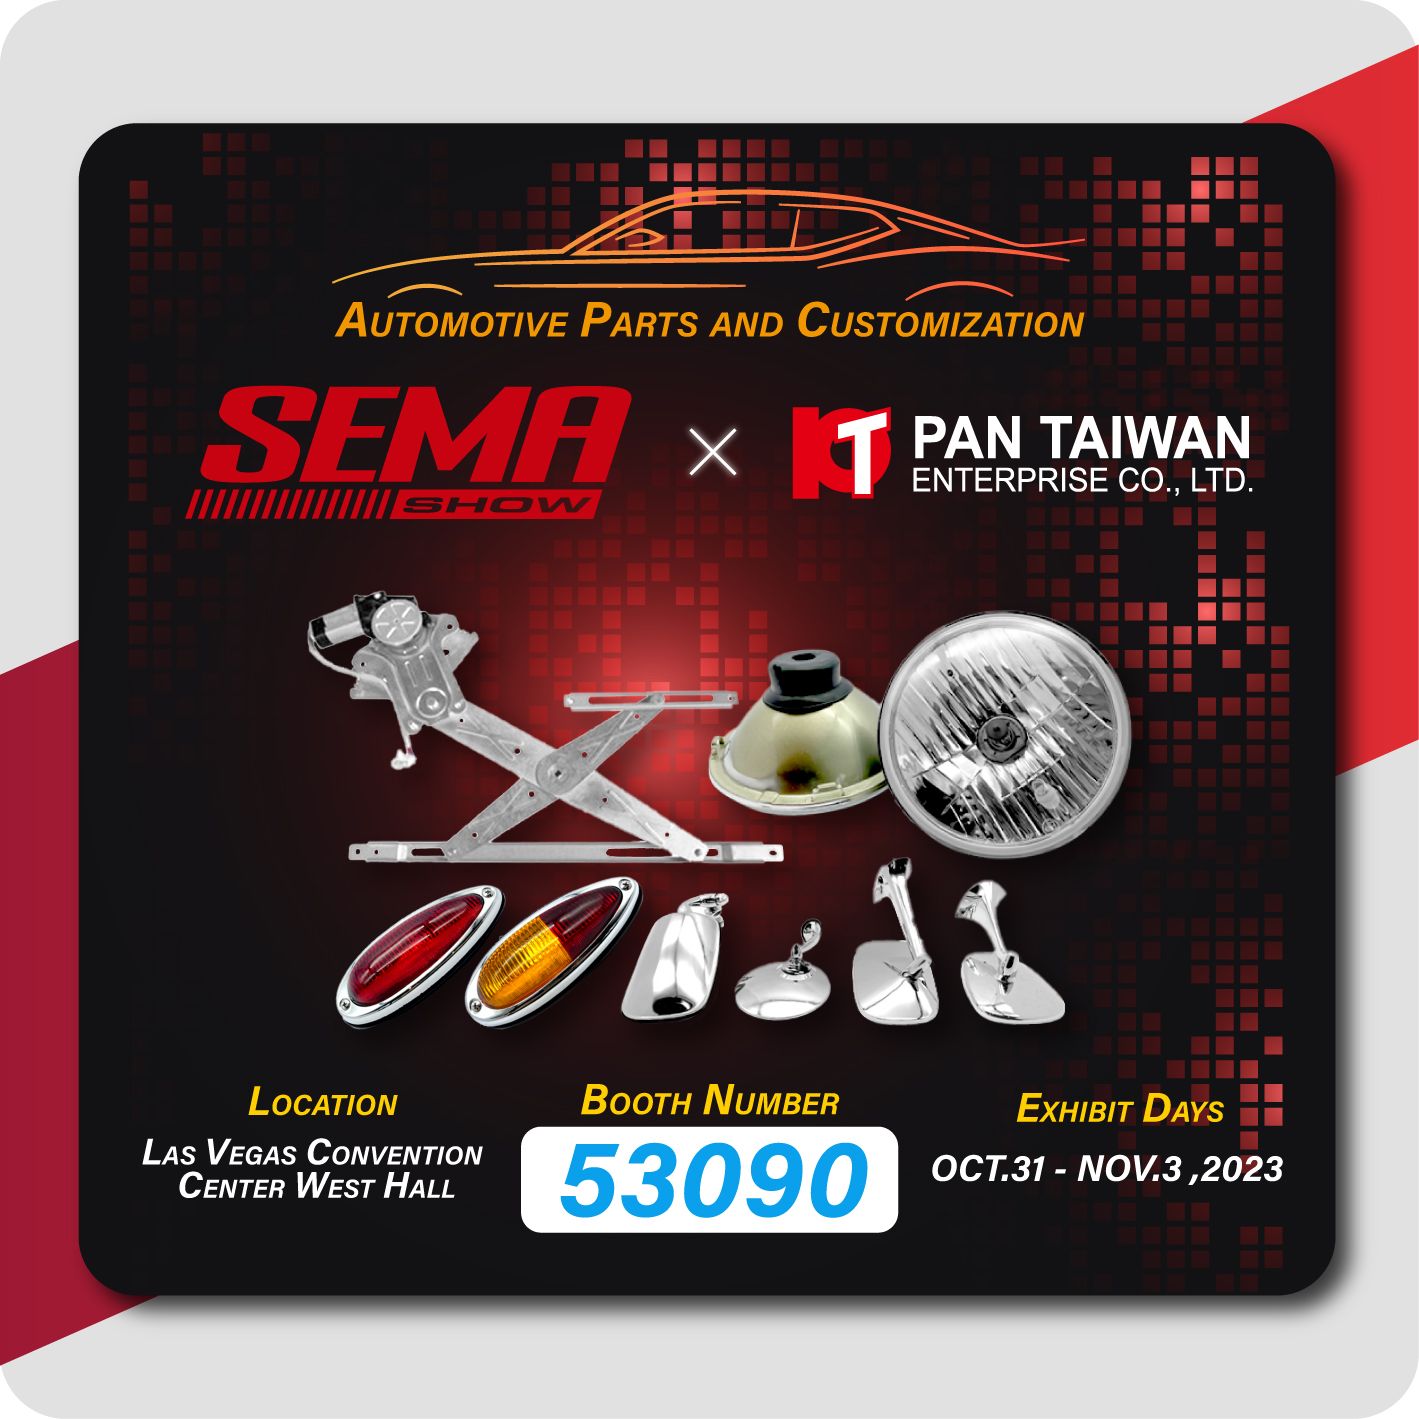 Pan Taiwan συμμετέχει στην SEMA 2023 και επιδεικνύει τον ρυθμιστή παραθύρου μας, κλασικά ανταλλακτικά αυτοκινήτων και εξατομικευμένες υπηρεσίες για αυτοκίνητα και ηλεκτρικά υβριδικά αυτοκίνητα σε όλους τους πελάτες μας.